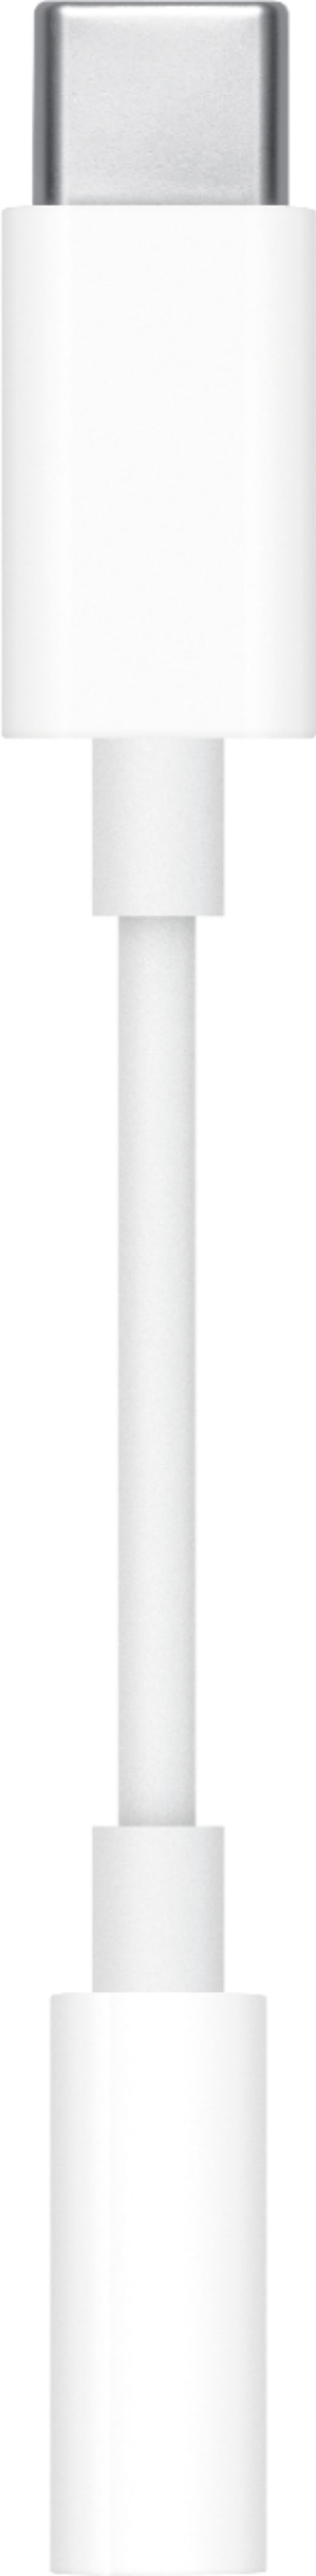 Apple - USB-C to 3.5mm Headphone Jack Adapter - White